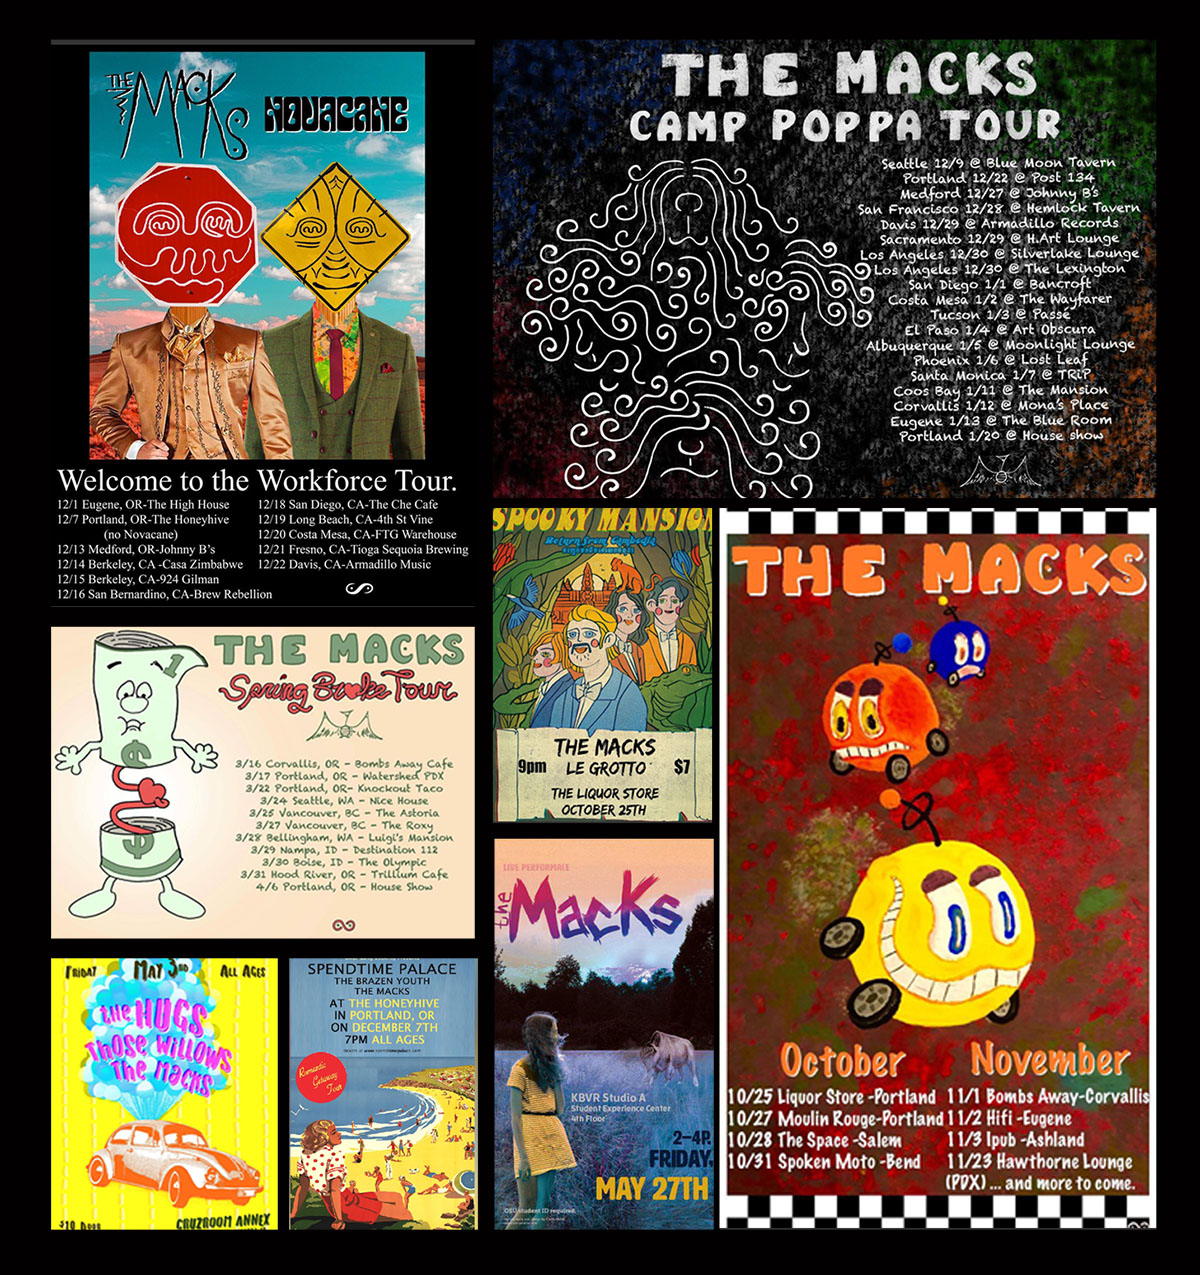 The Macks on tour poster collage